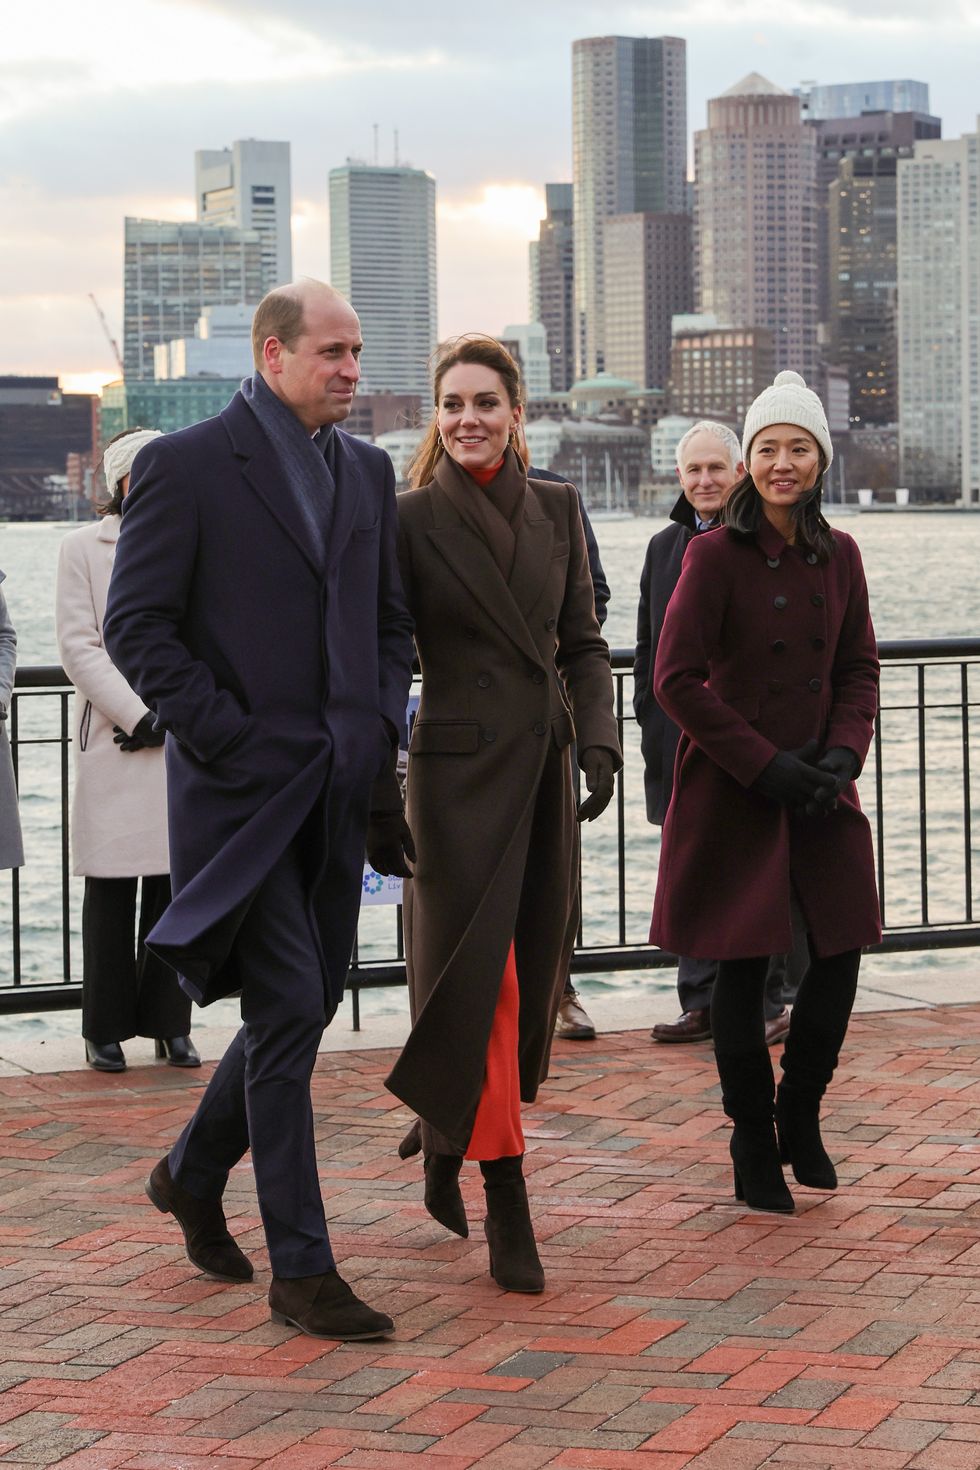 the prince and princess of wales visit boston